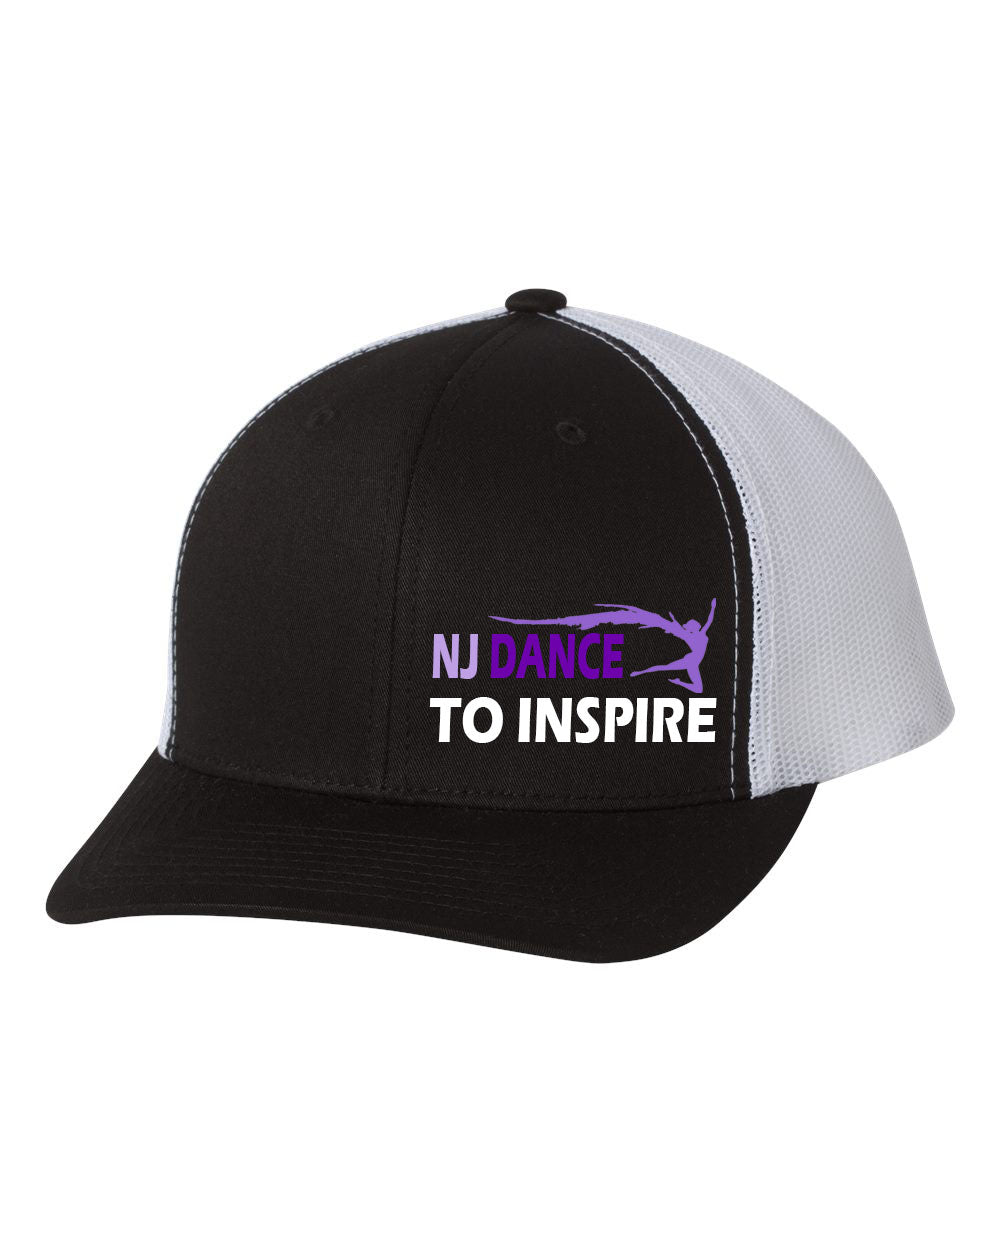 NJ Dance Design 2 Trucker Hat